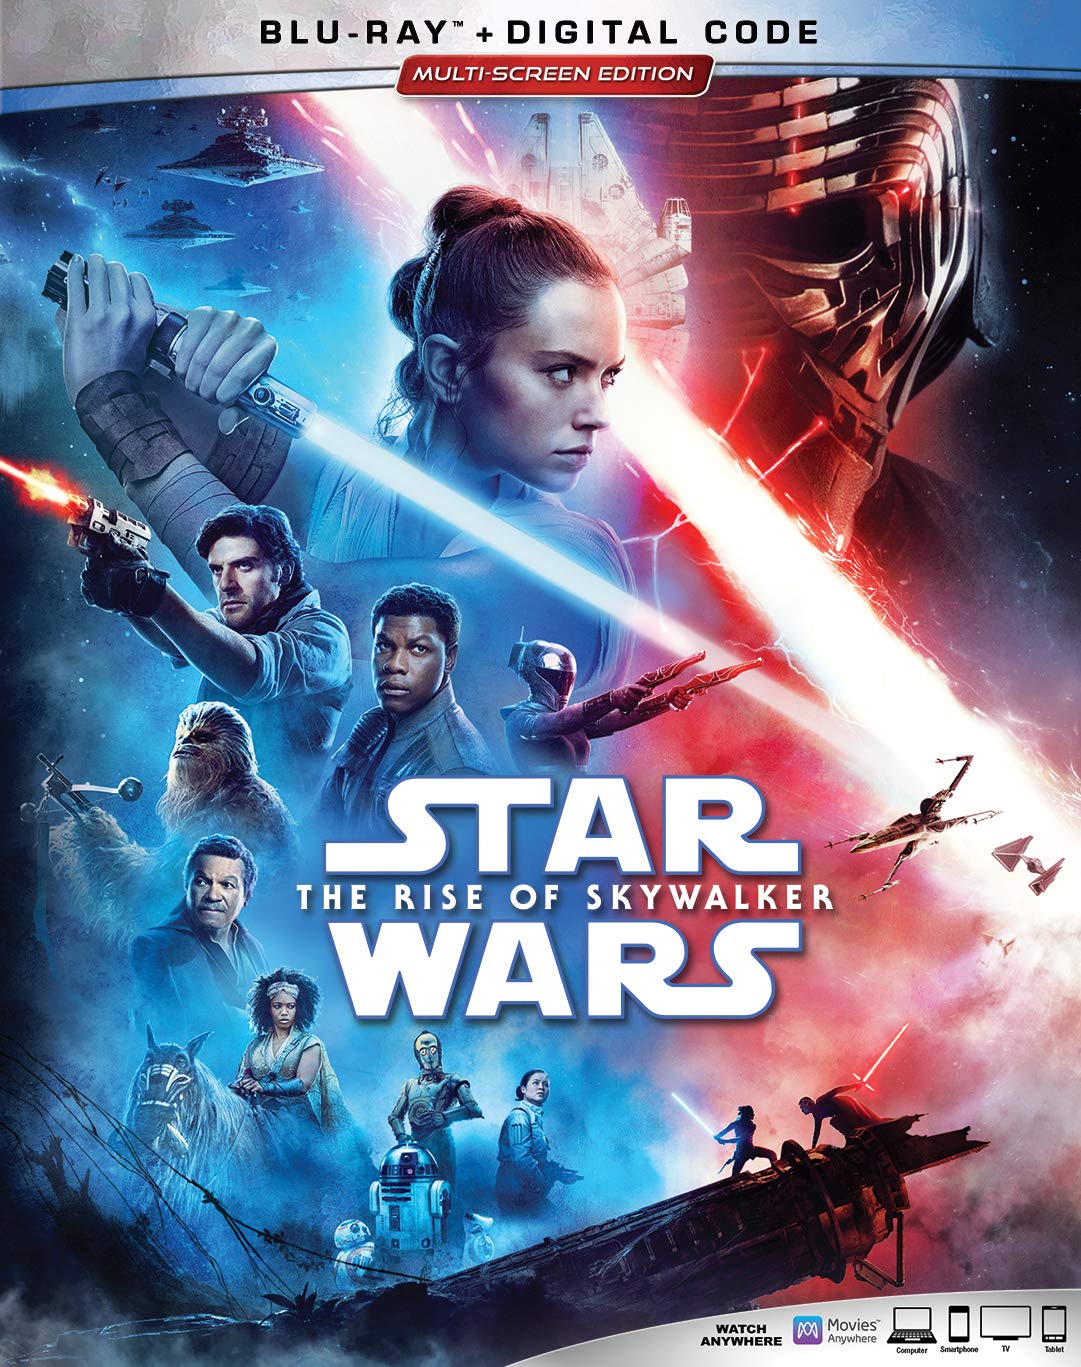 Image for "Star Wars: The Rise of Skywalker"